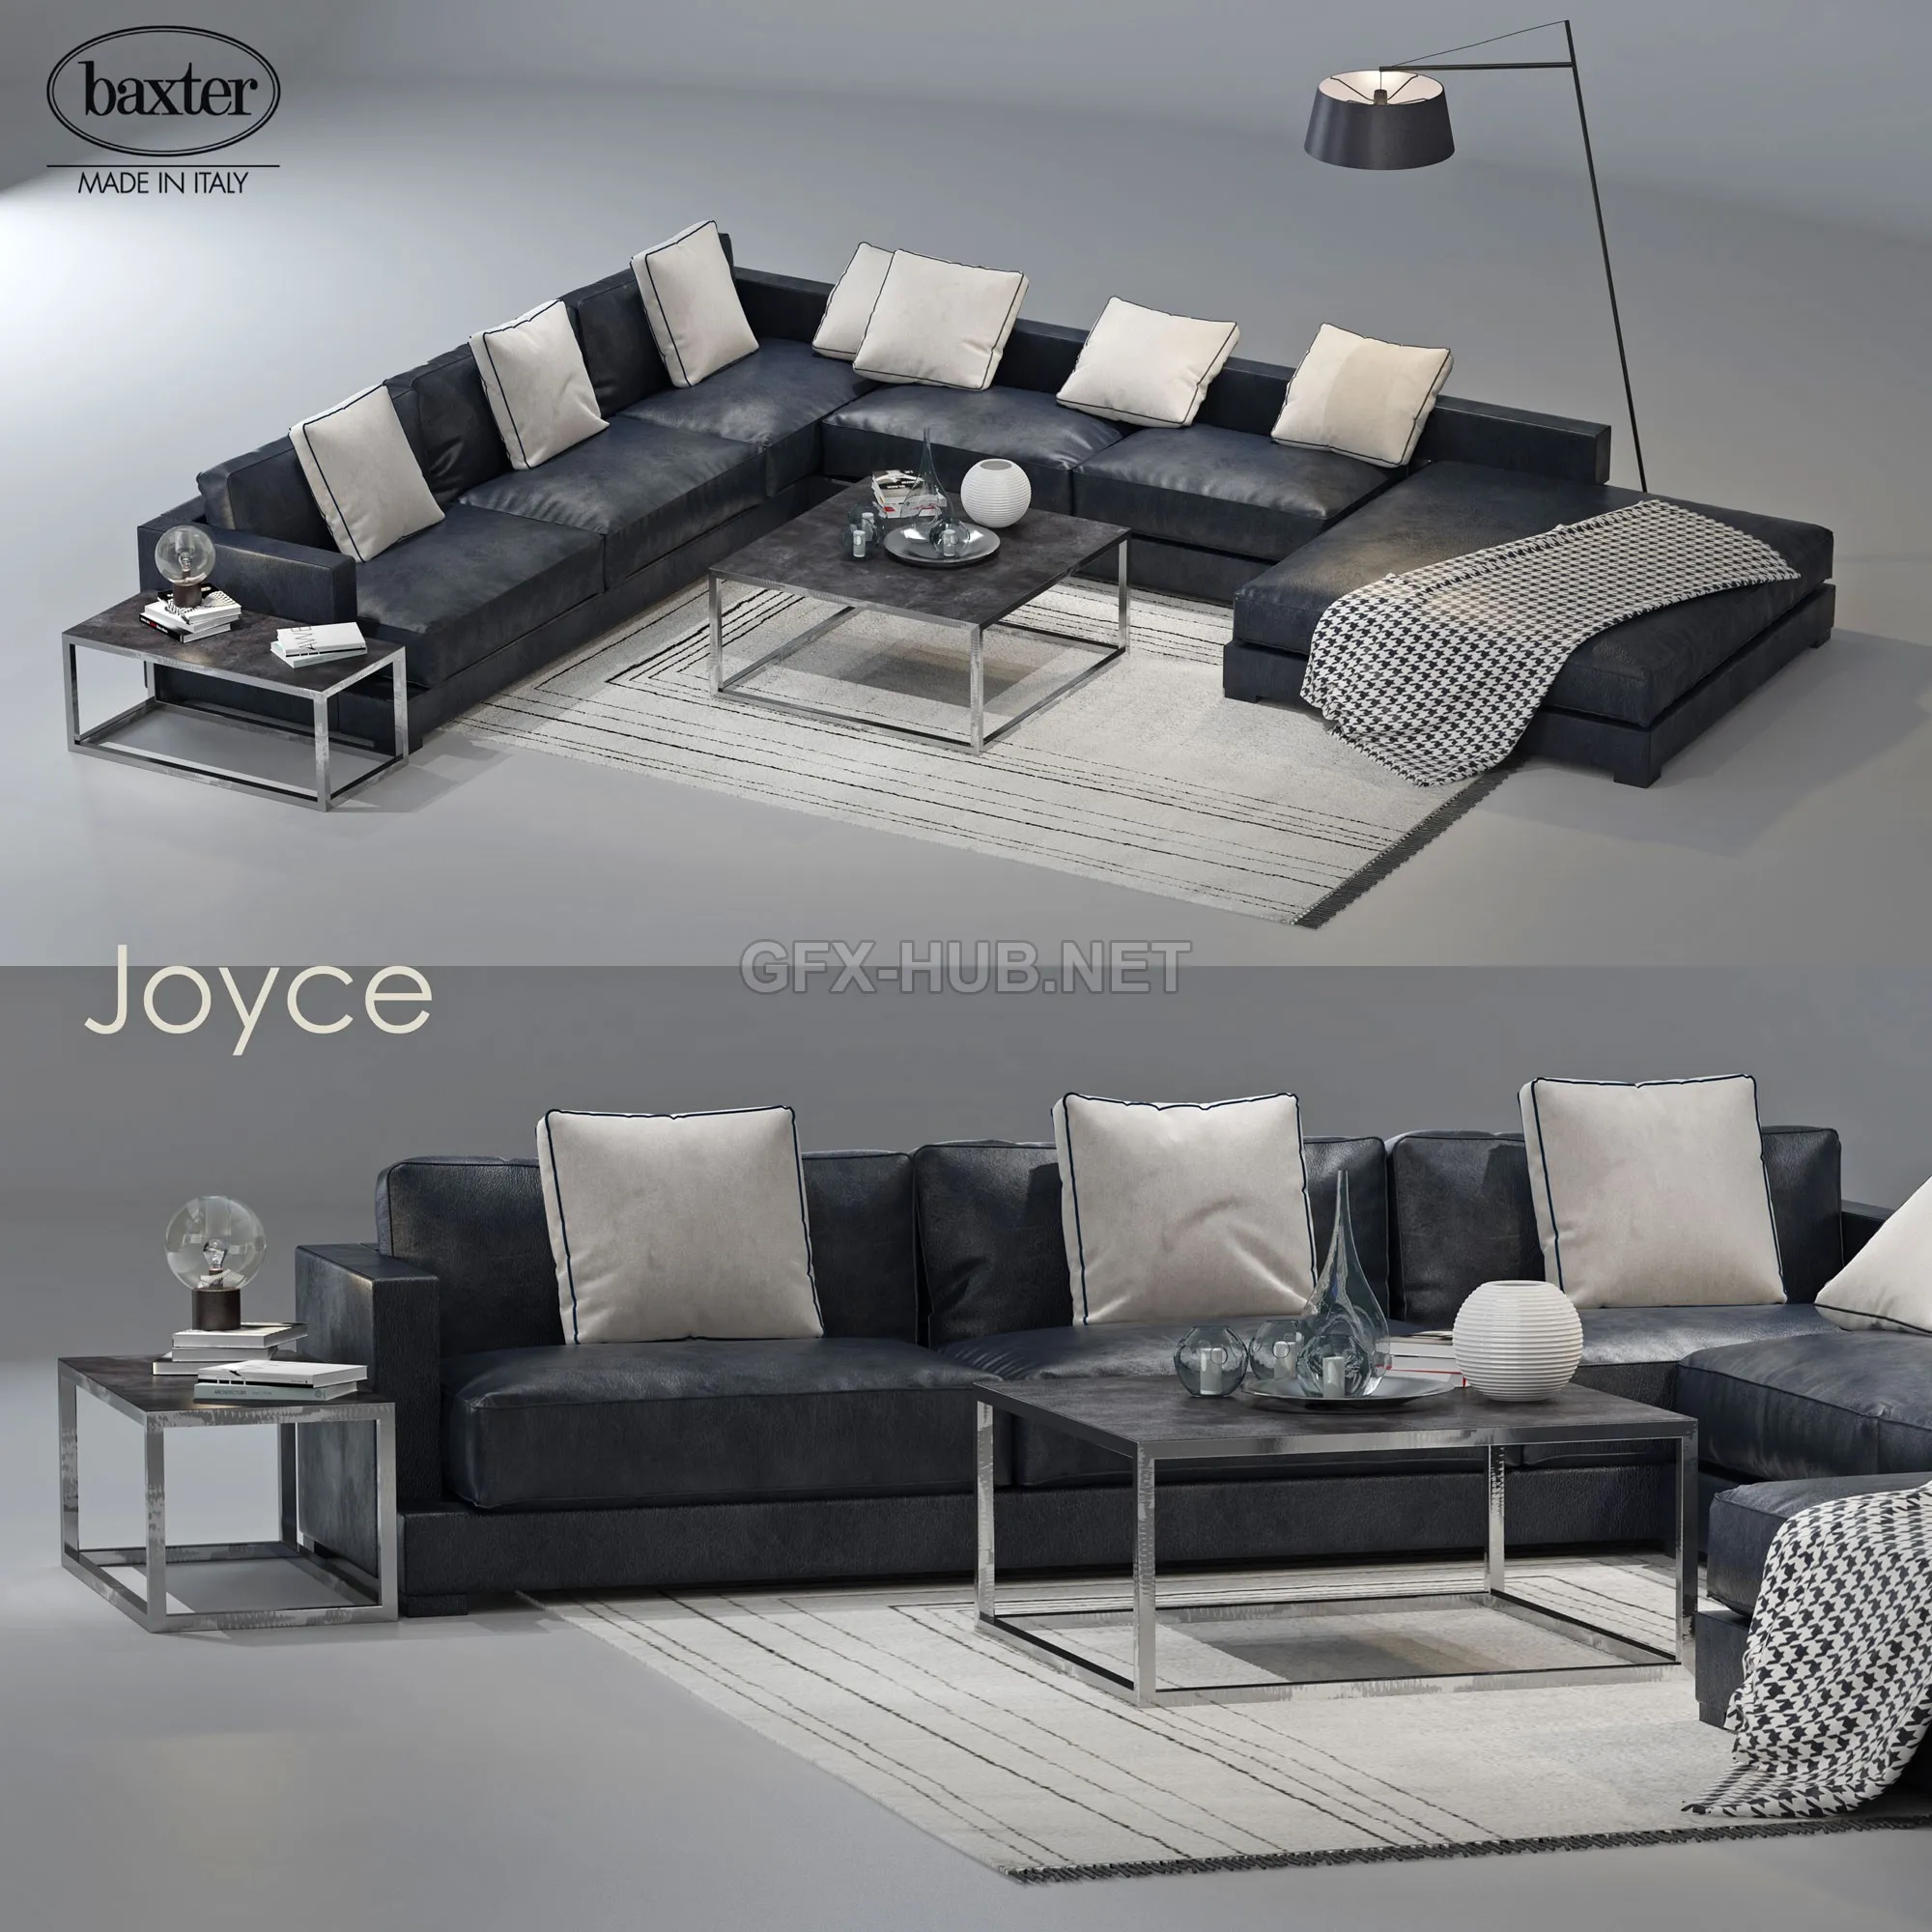 Sofa Joyce by Baxter – 225653